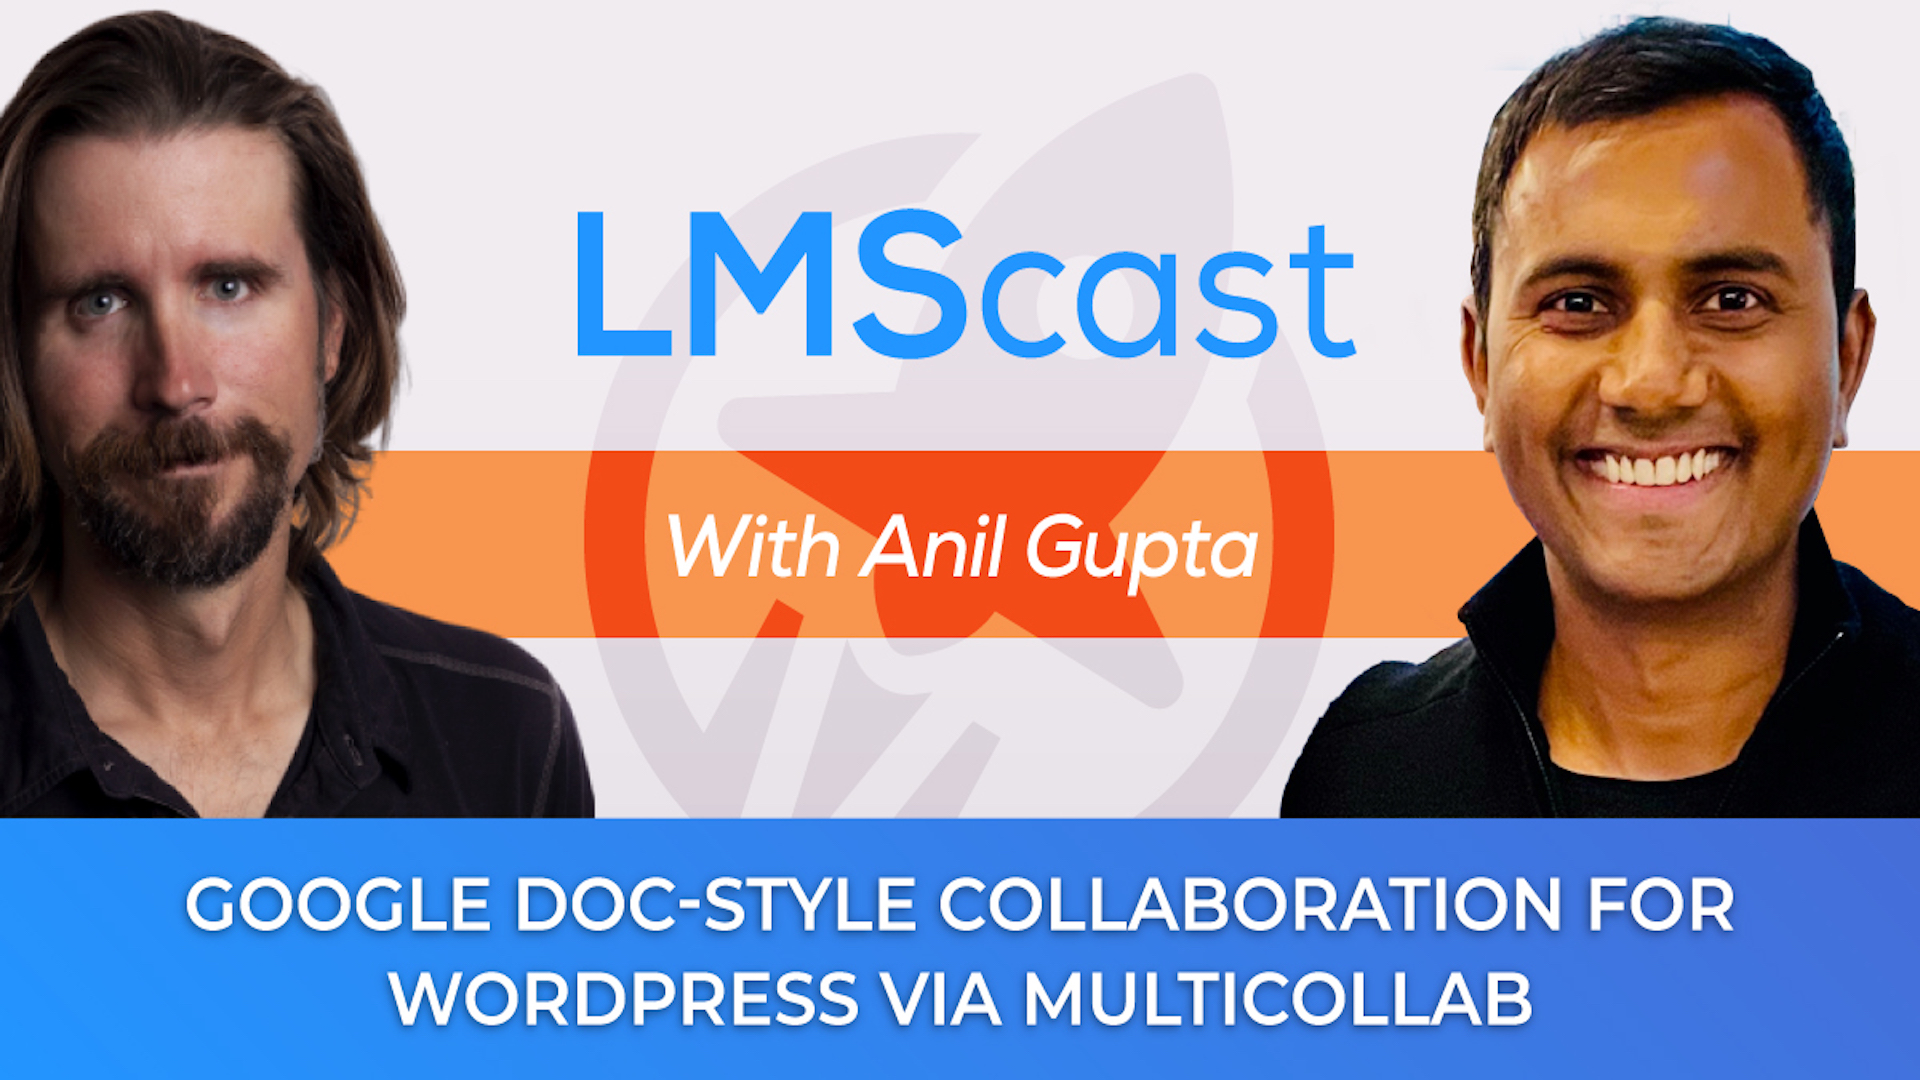 Google Doc Style Collaboration for WordPress via Multicollab with Multidots CEO Anil Gupta